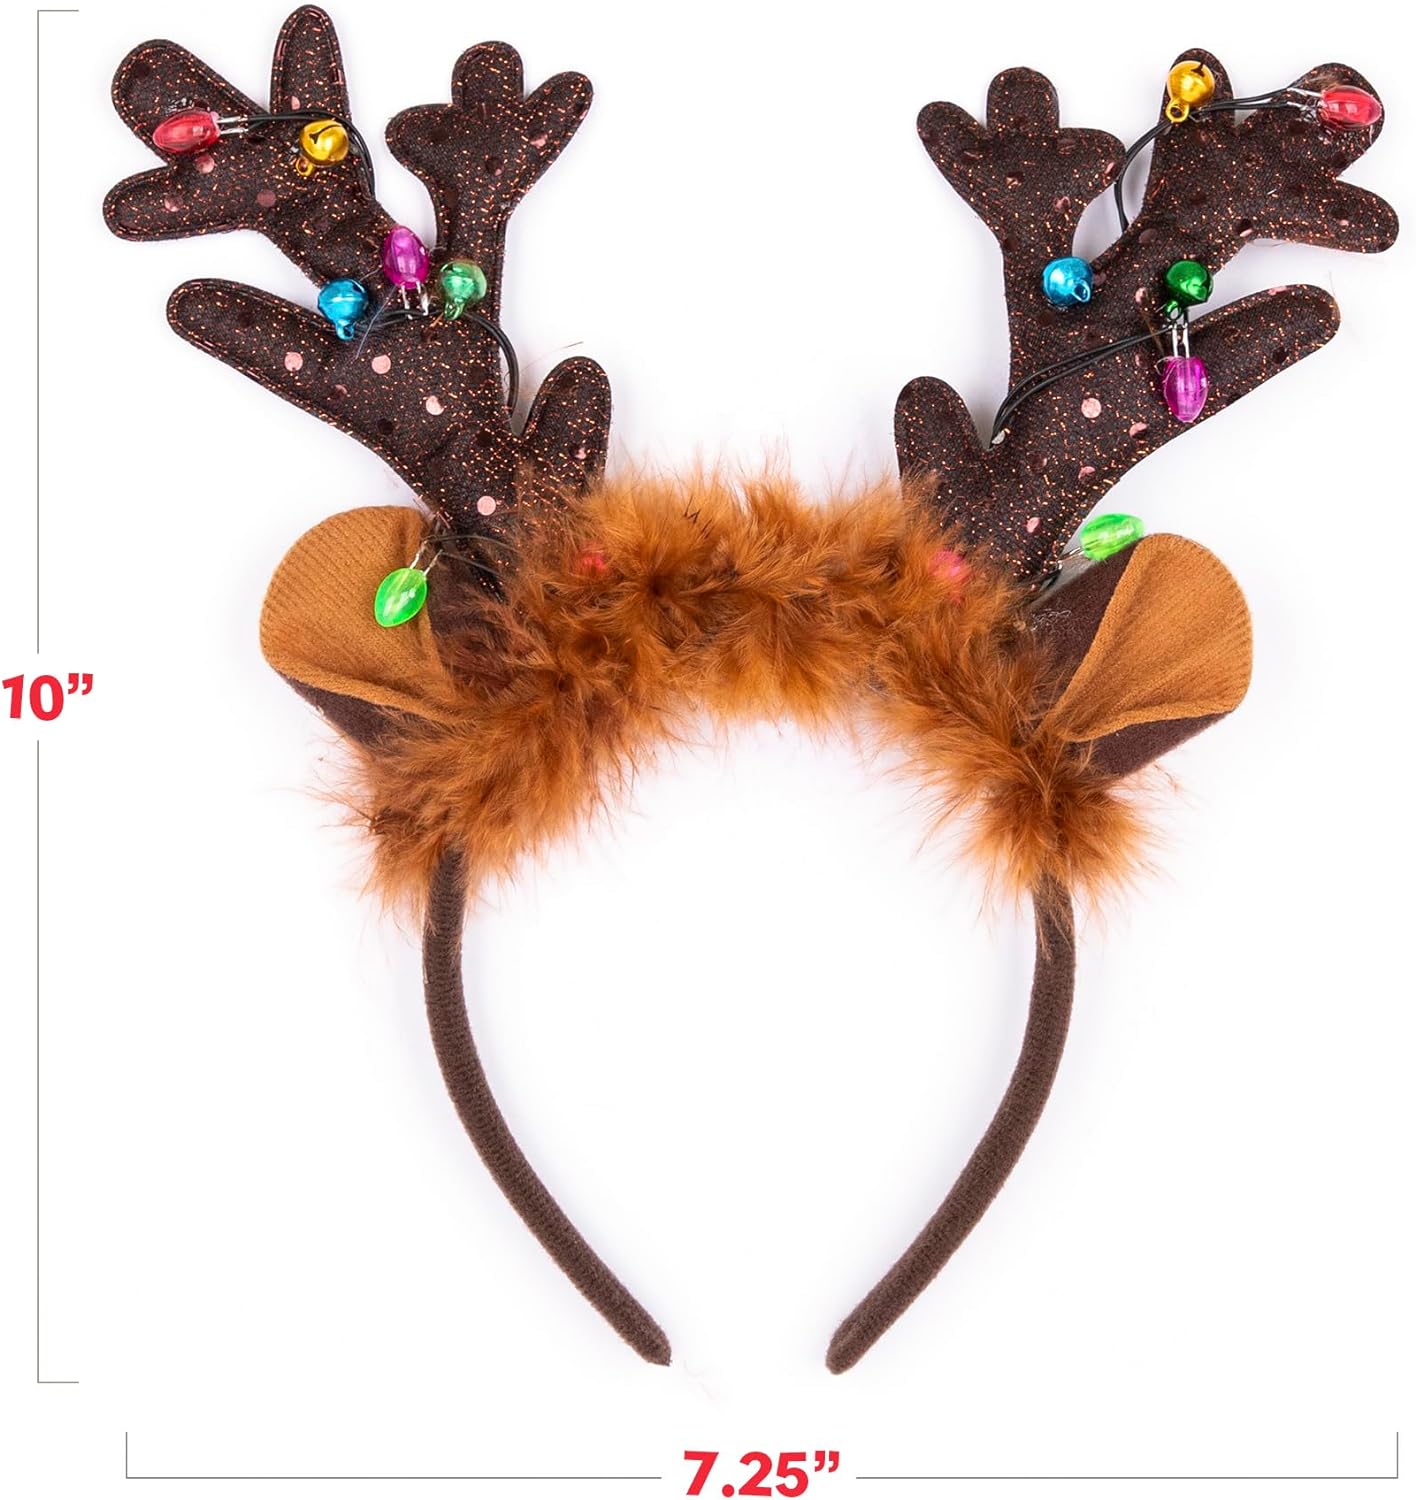 Light Up Christmas Reindeer Headbands - Set of 4 - Reindeer Ears Headbands with LED Lights and Jingling Bells